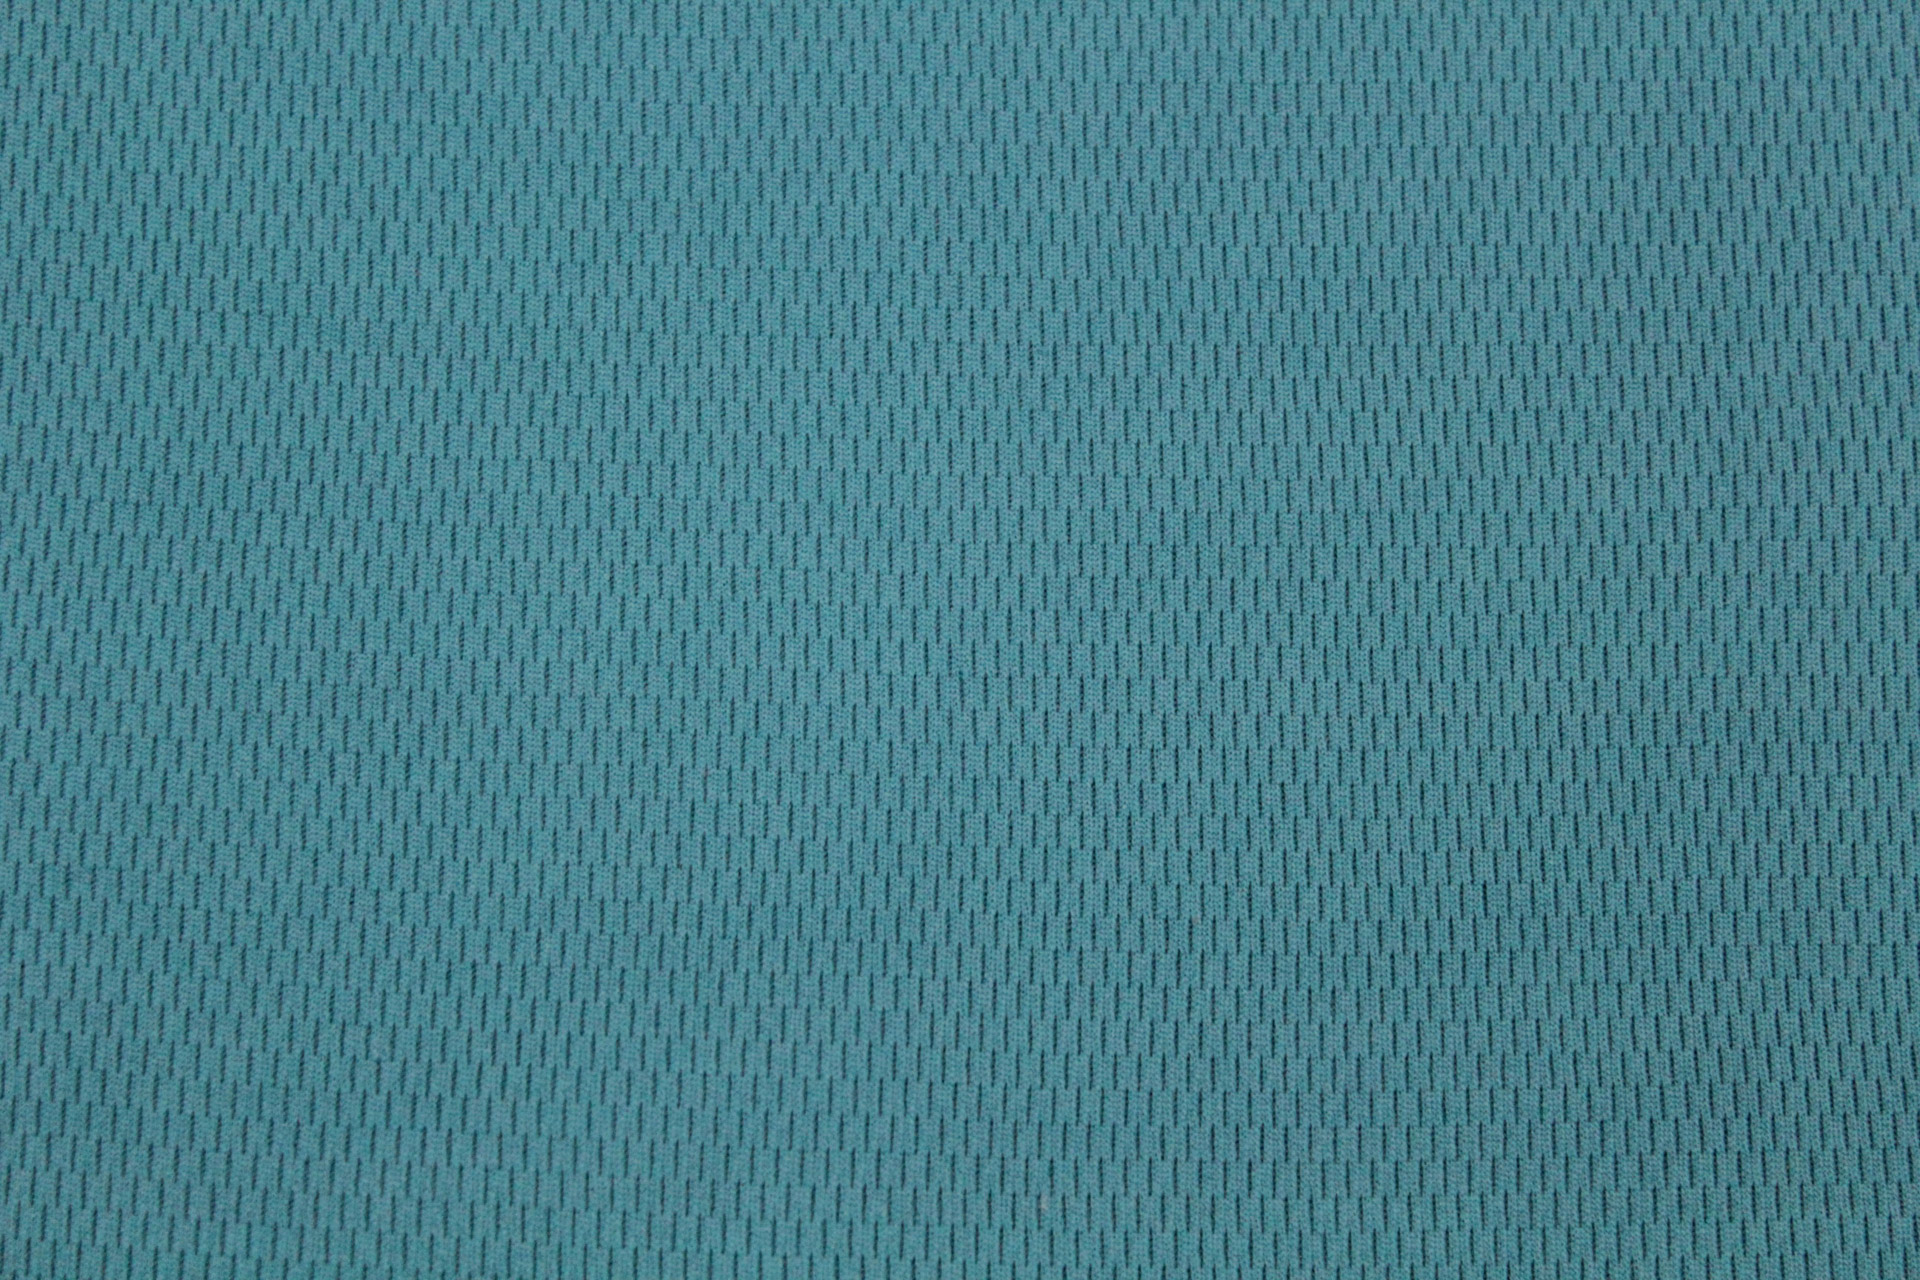 Blue Textile Background 5 Free Stock Photo - Public Domain Pictures